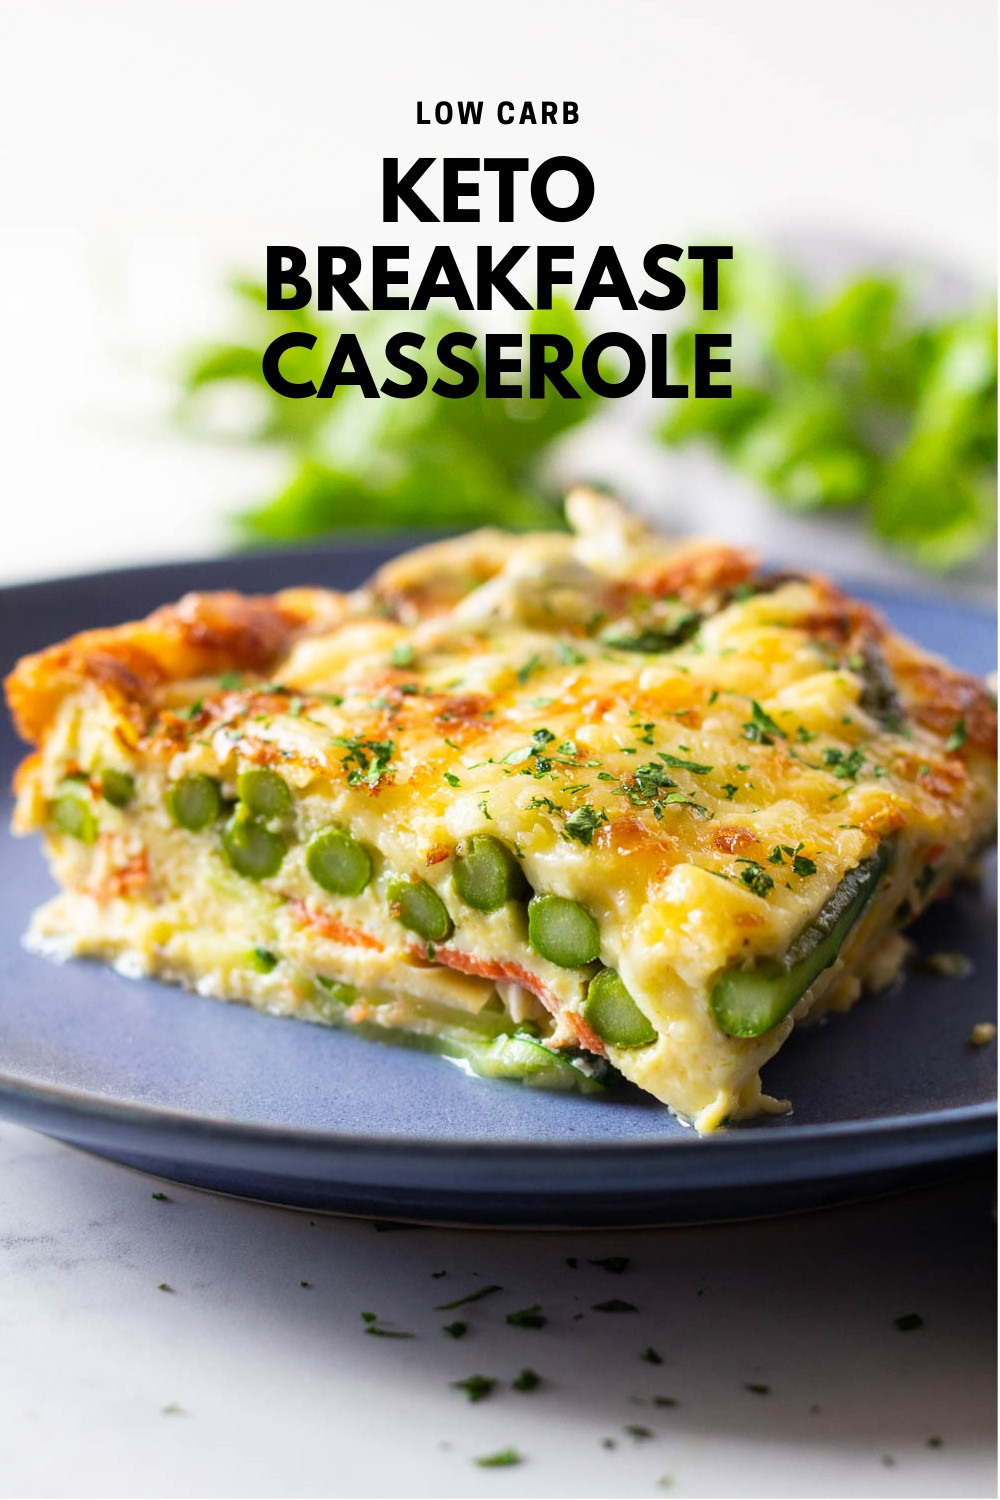 Keto Diet Recipes Breakfast Low Carb
 Easy Keto Breakfast Casserole Green Healthy Cooking